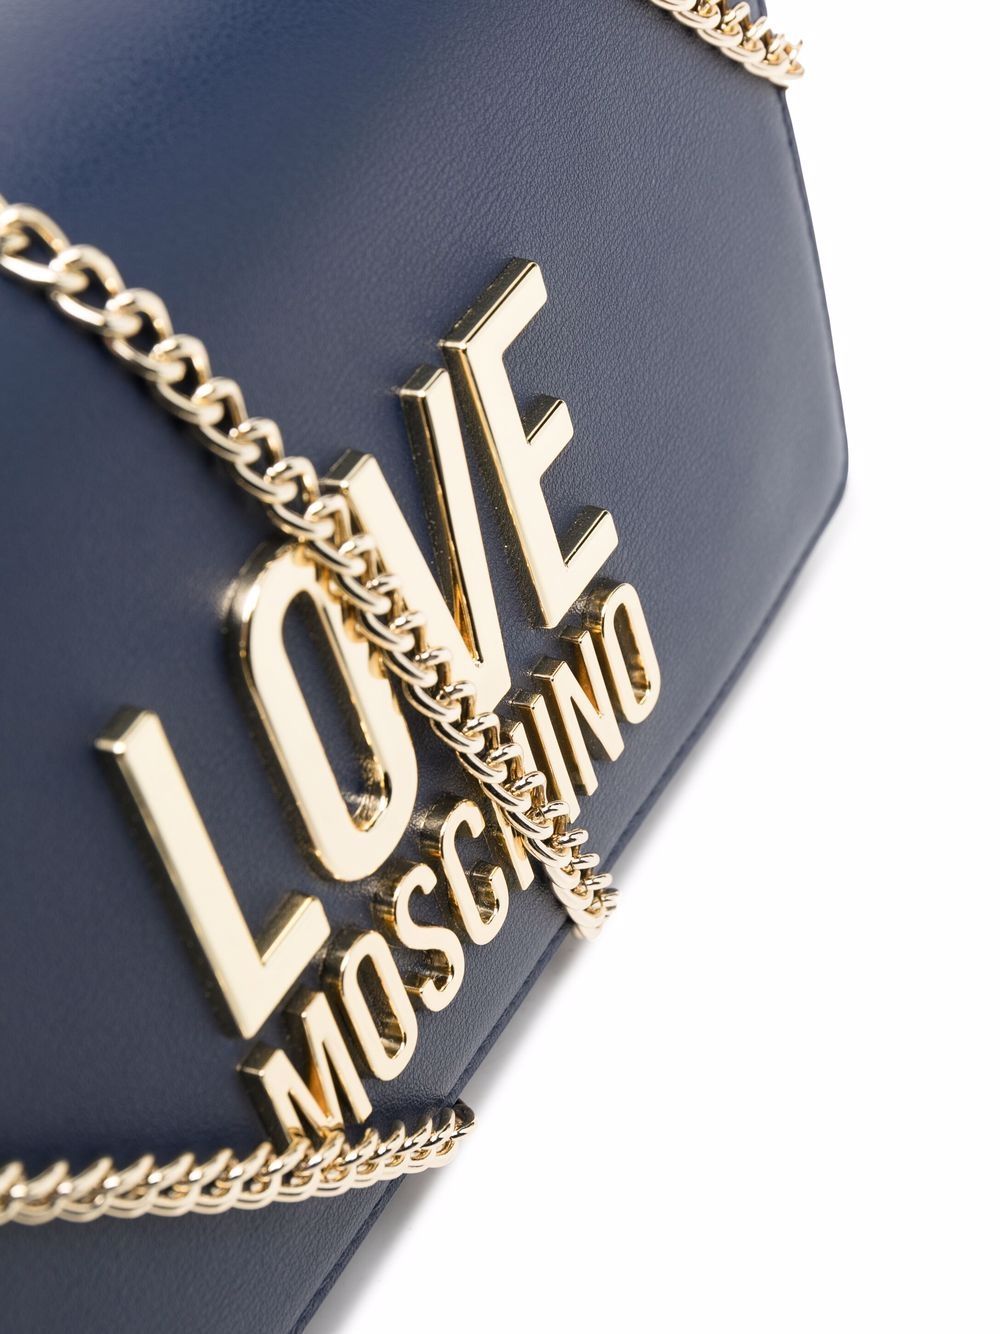 фото Love moschino клатч с логотипом